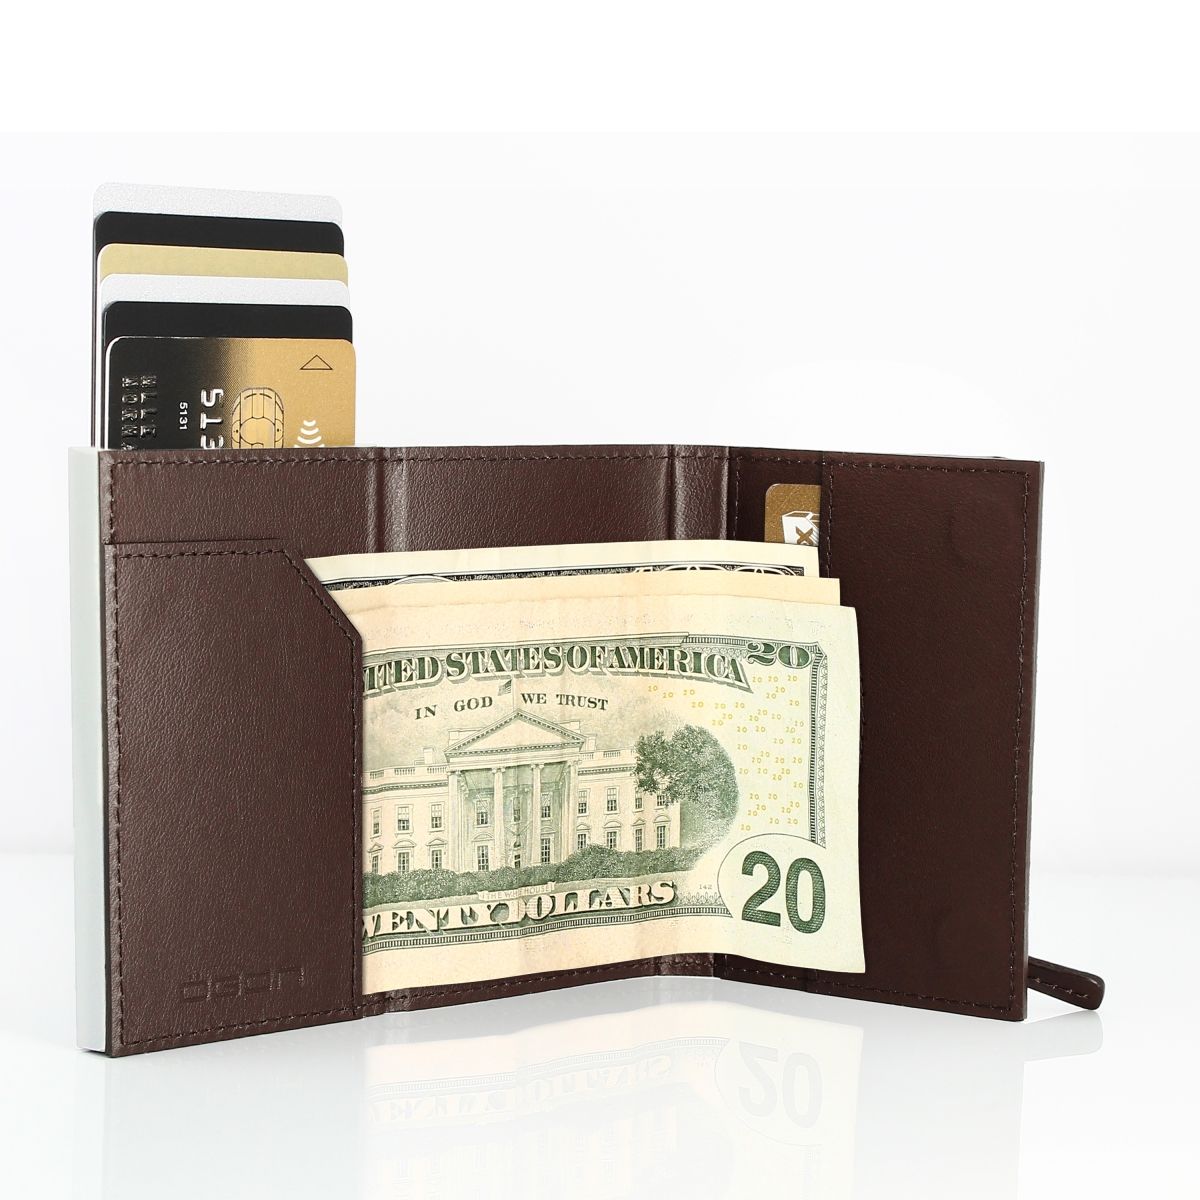 OGON Cascade Card Case Wallet With Zipper - Dark Brown